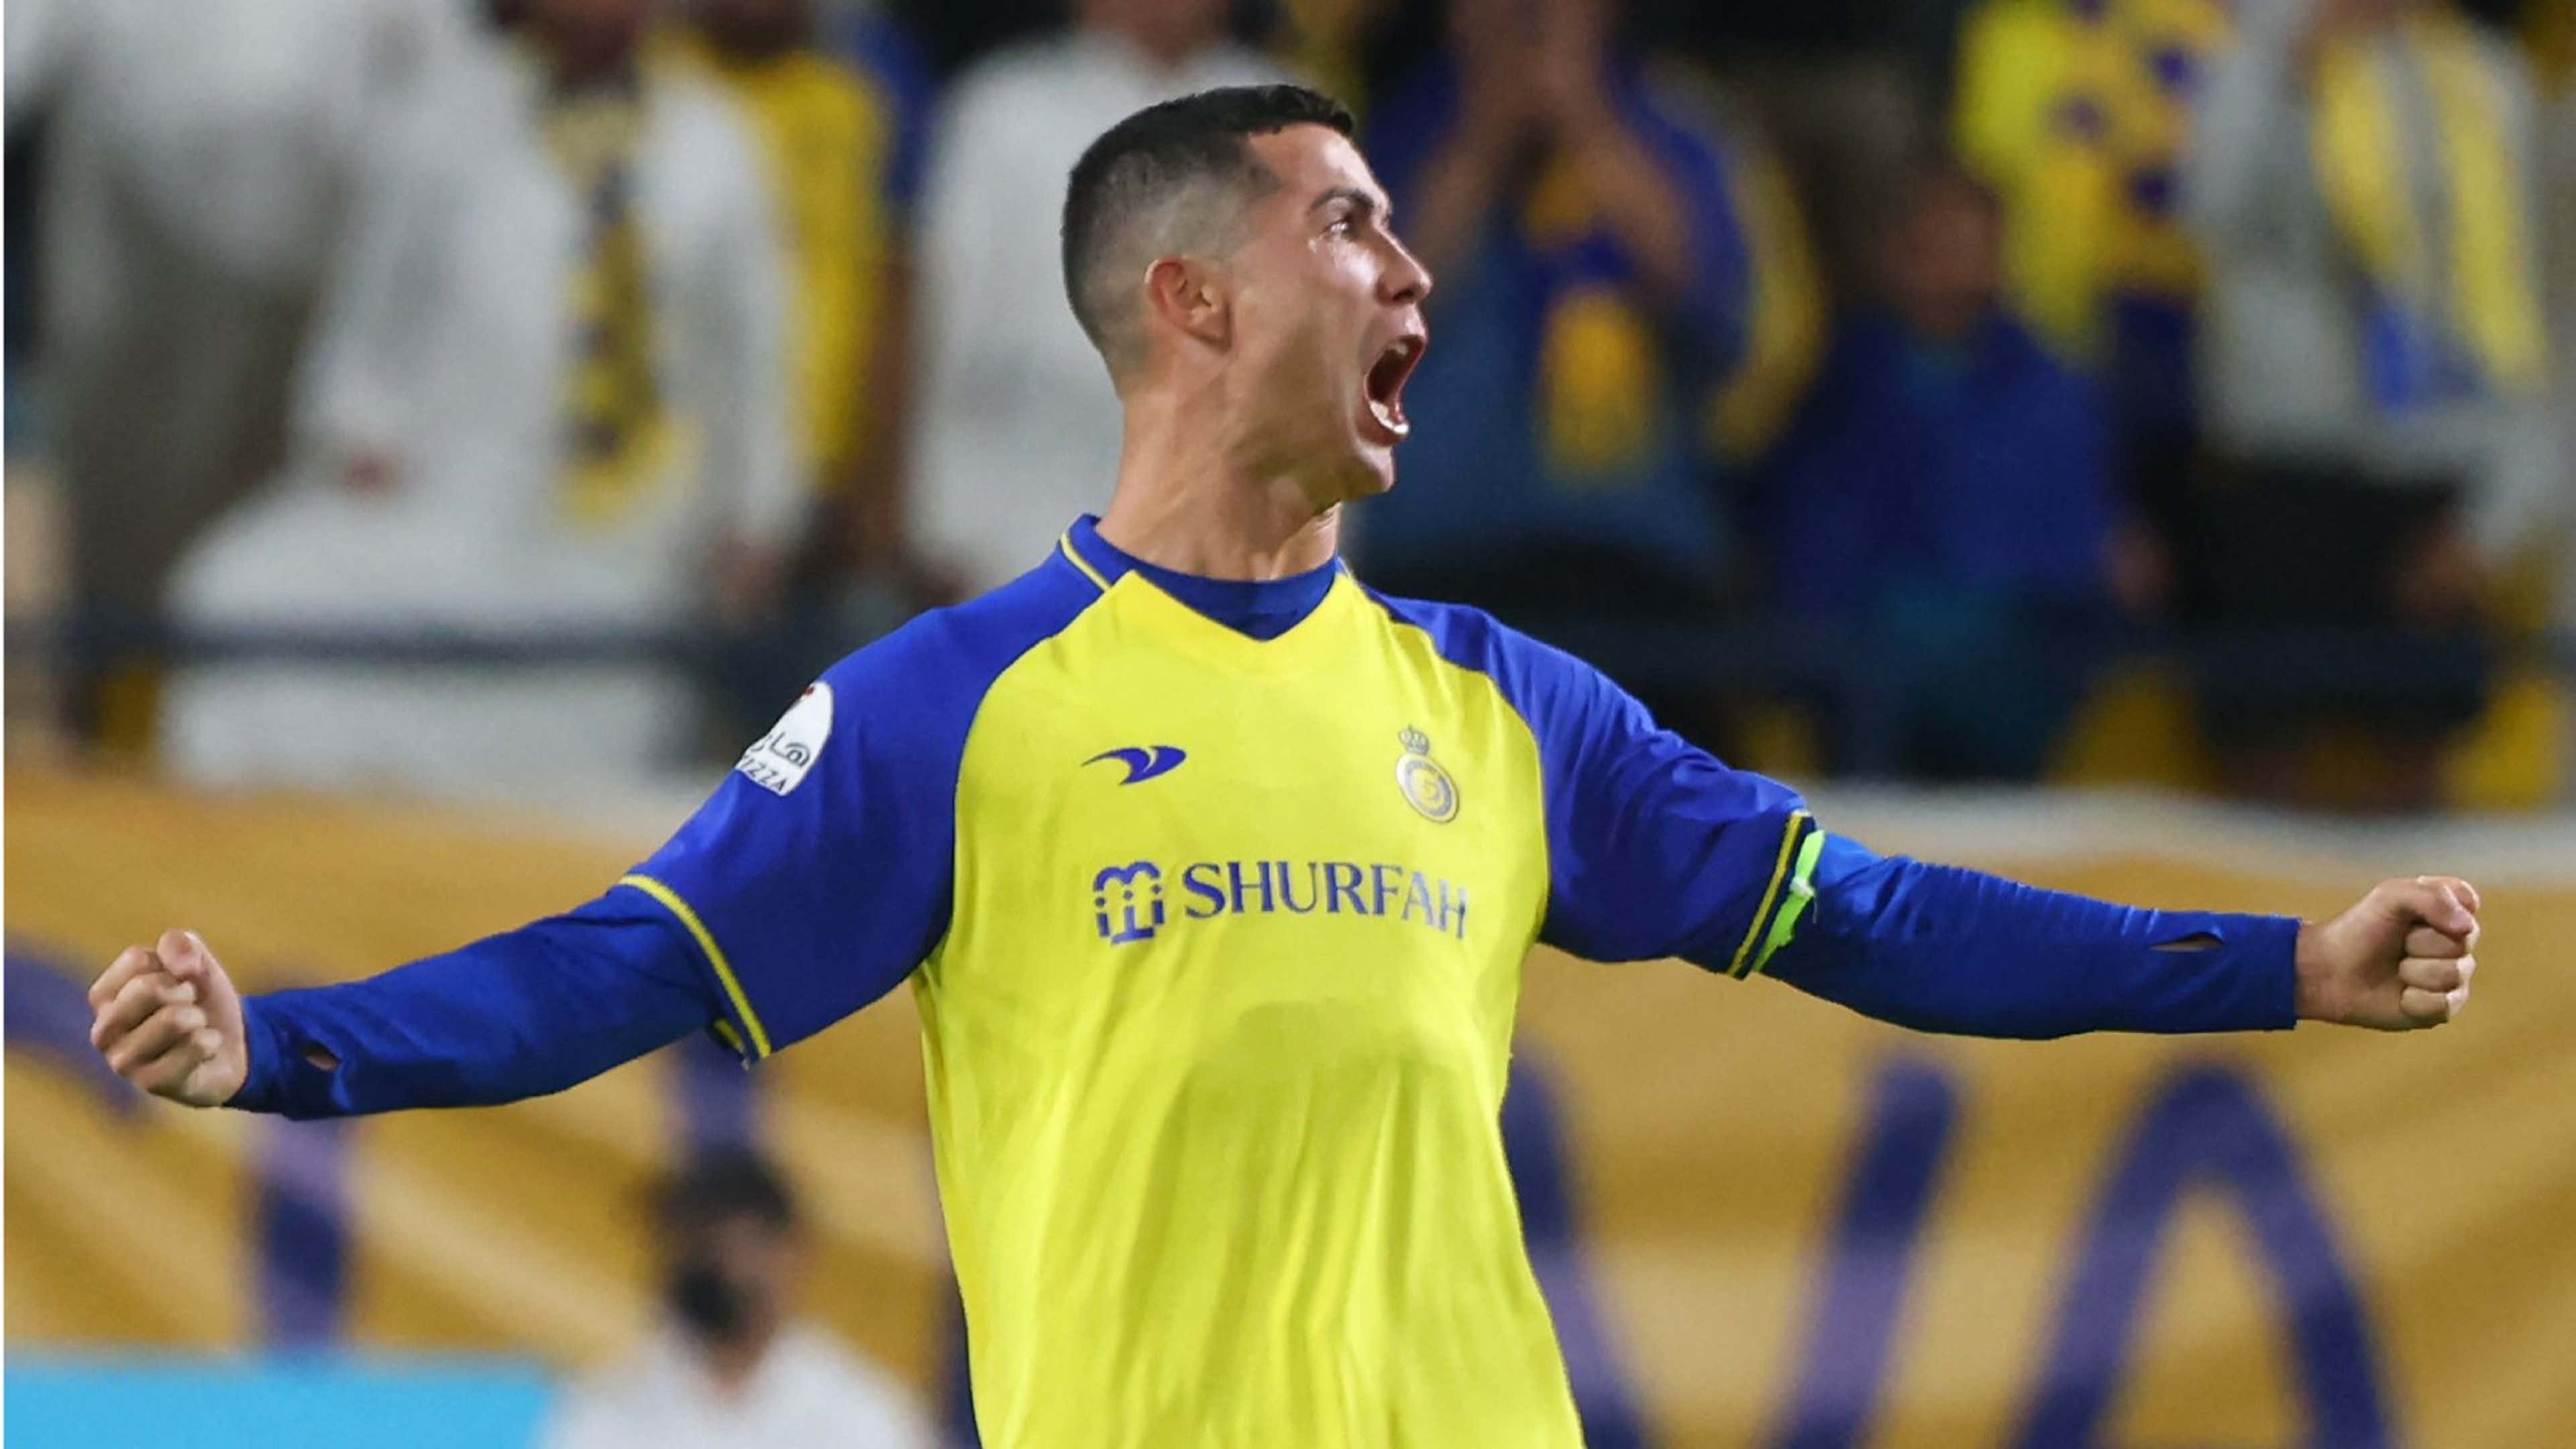 Al Nassr Coach reaction to Cristiano Ronaldo Free kick goal Vs Damac 